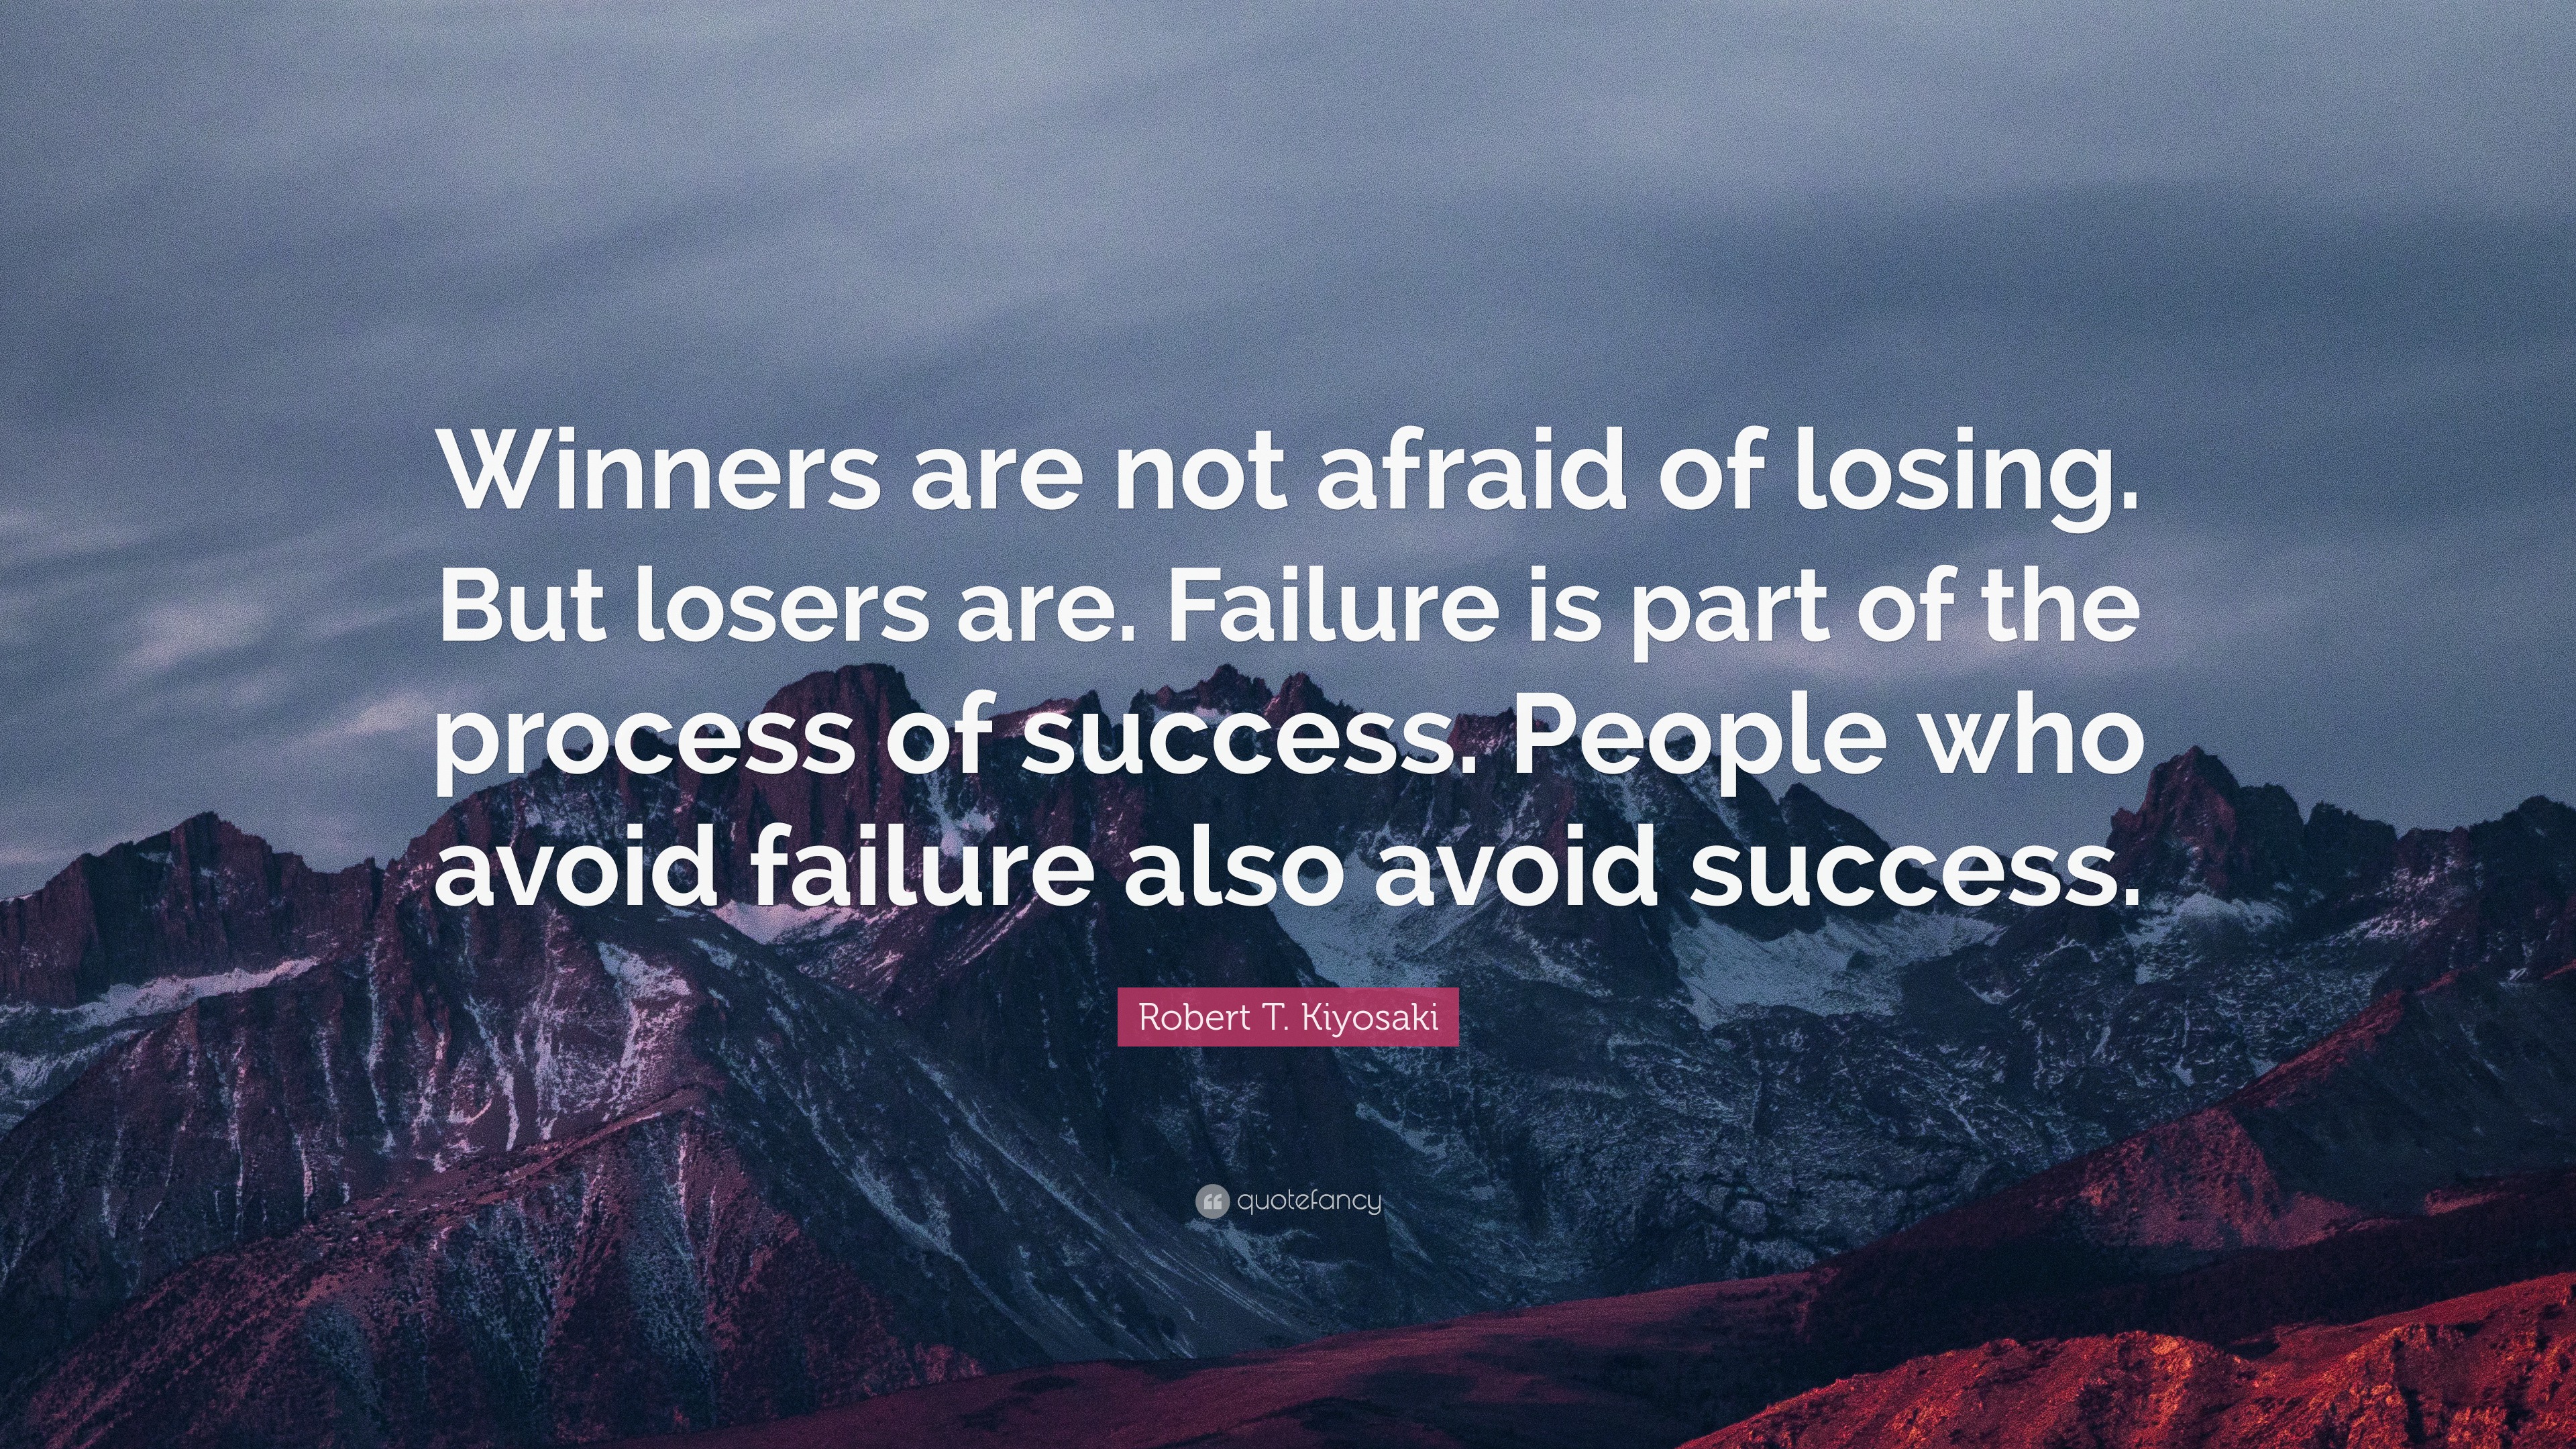 Robert T. Kiyosaki Quote: “Winners are not afraid of losing. But ...